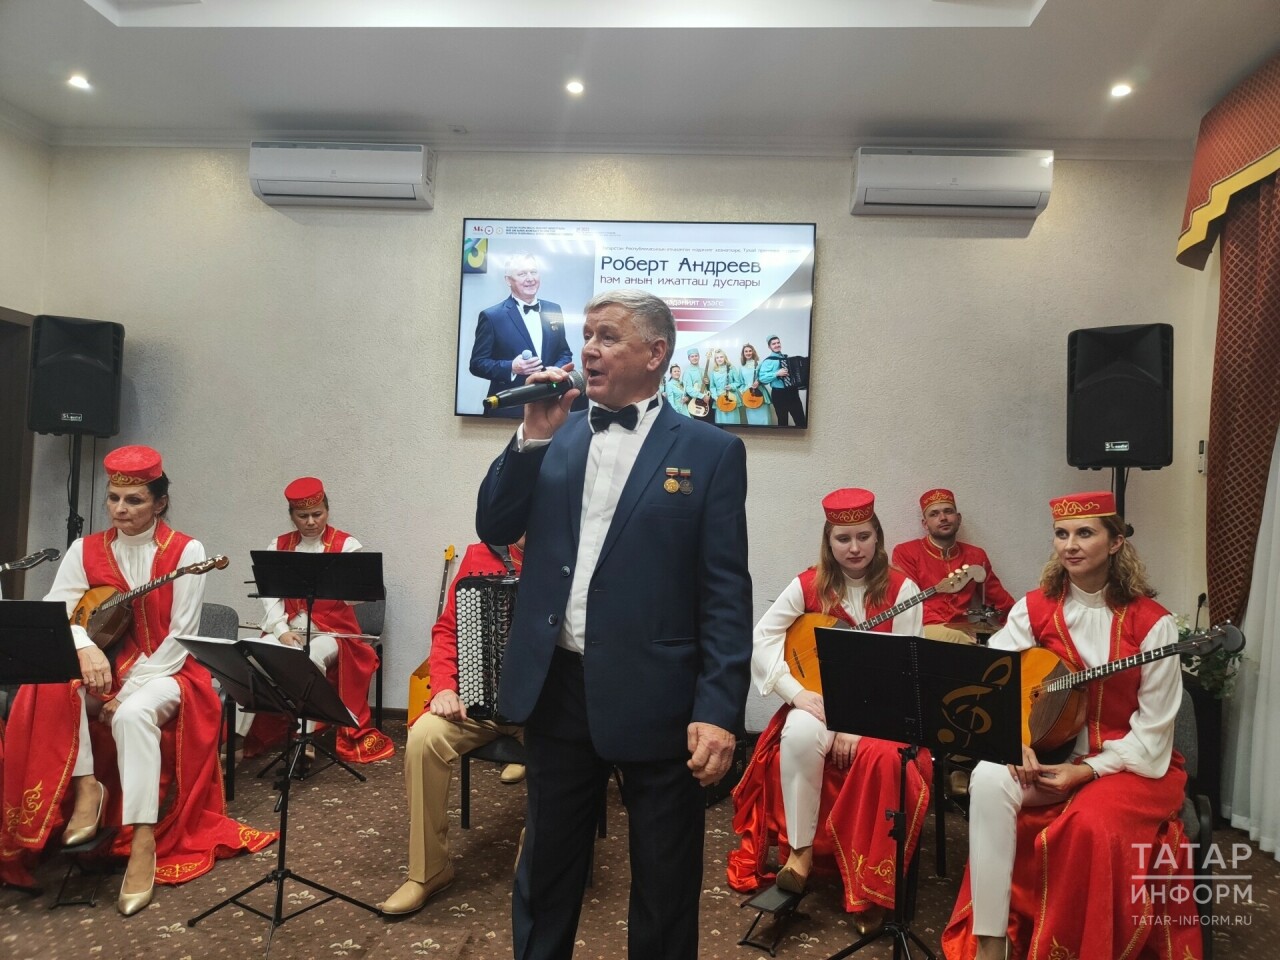 Ансамбль, встретивший Президента Узбекистана, дал концерт в культурном центре кряшен